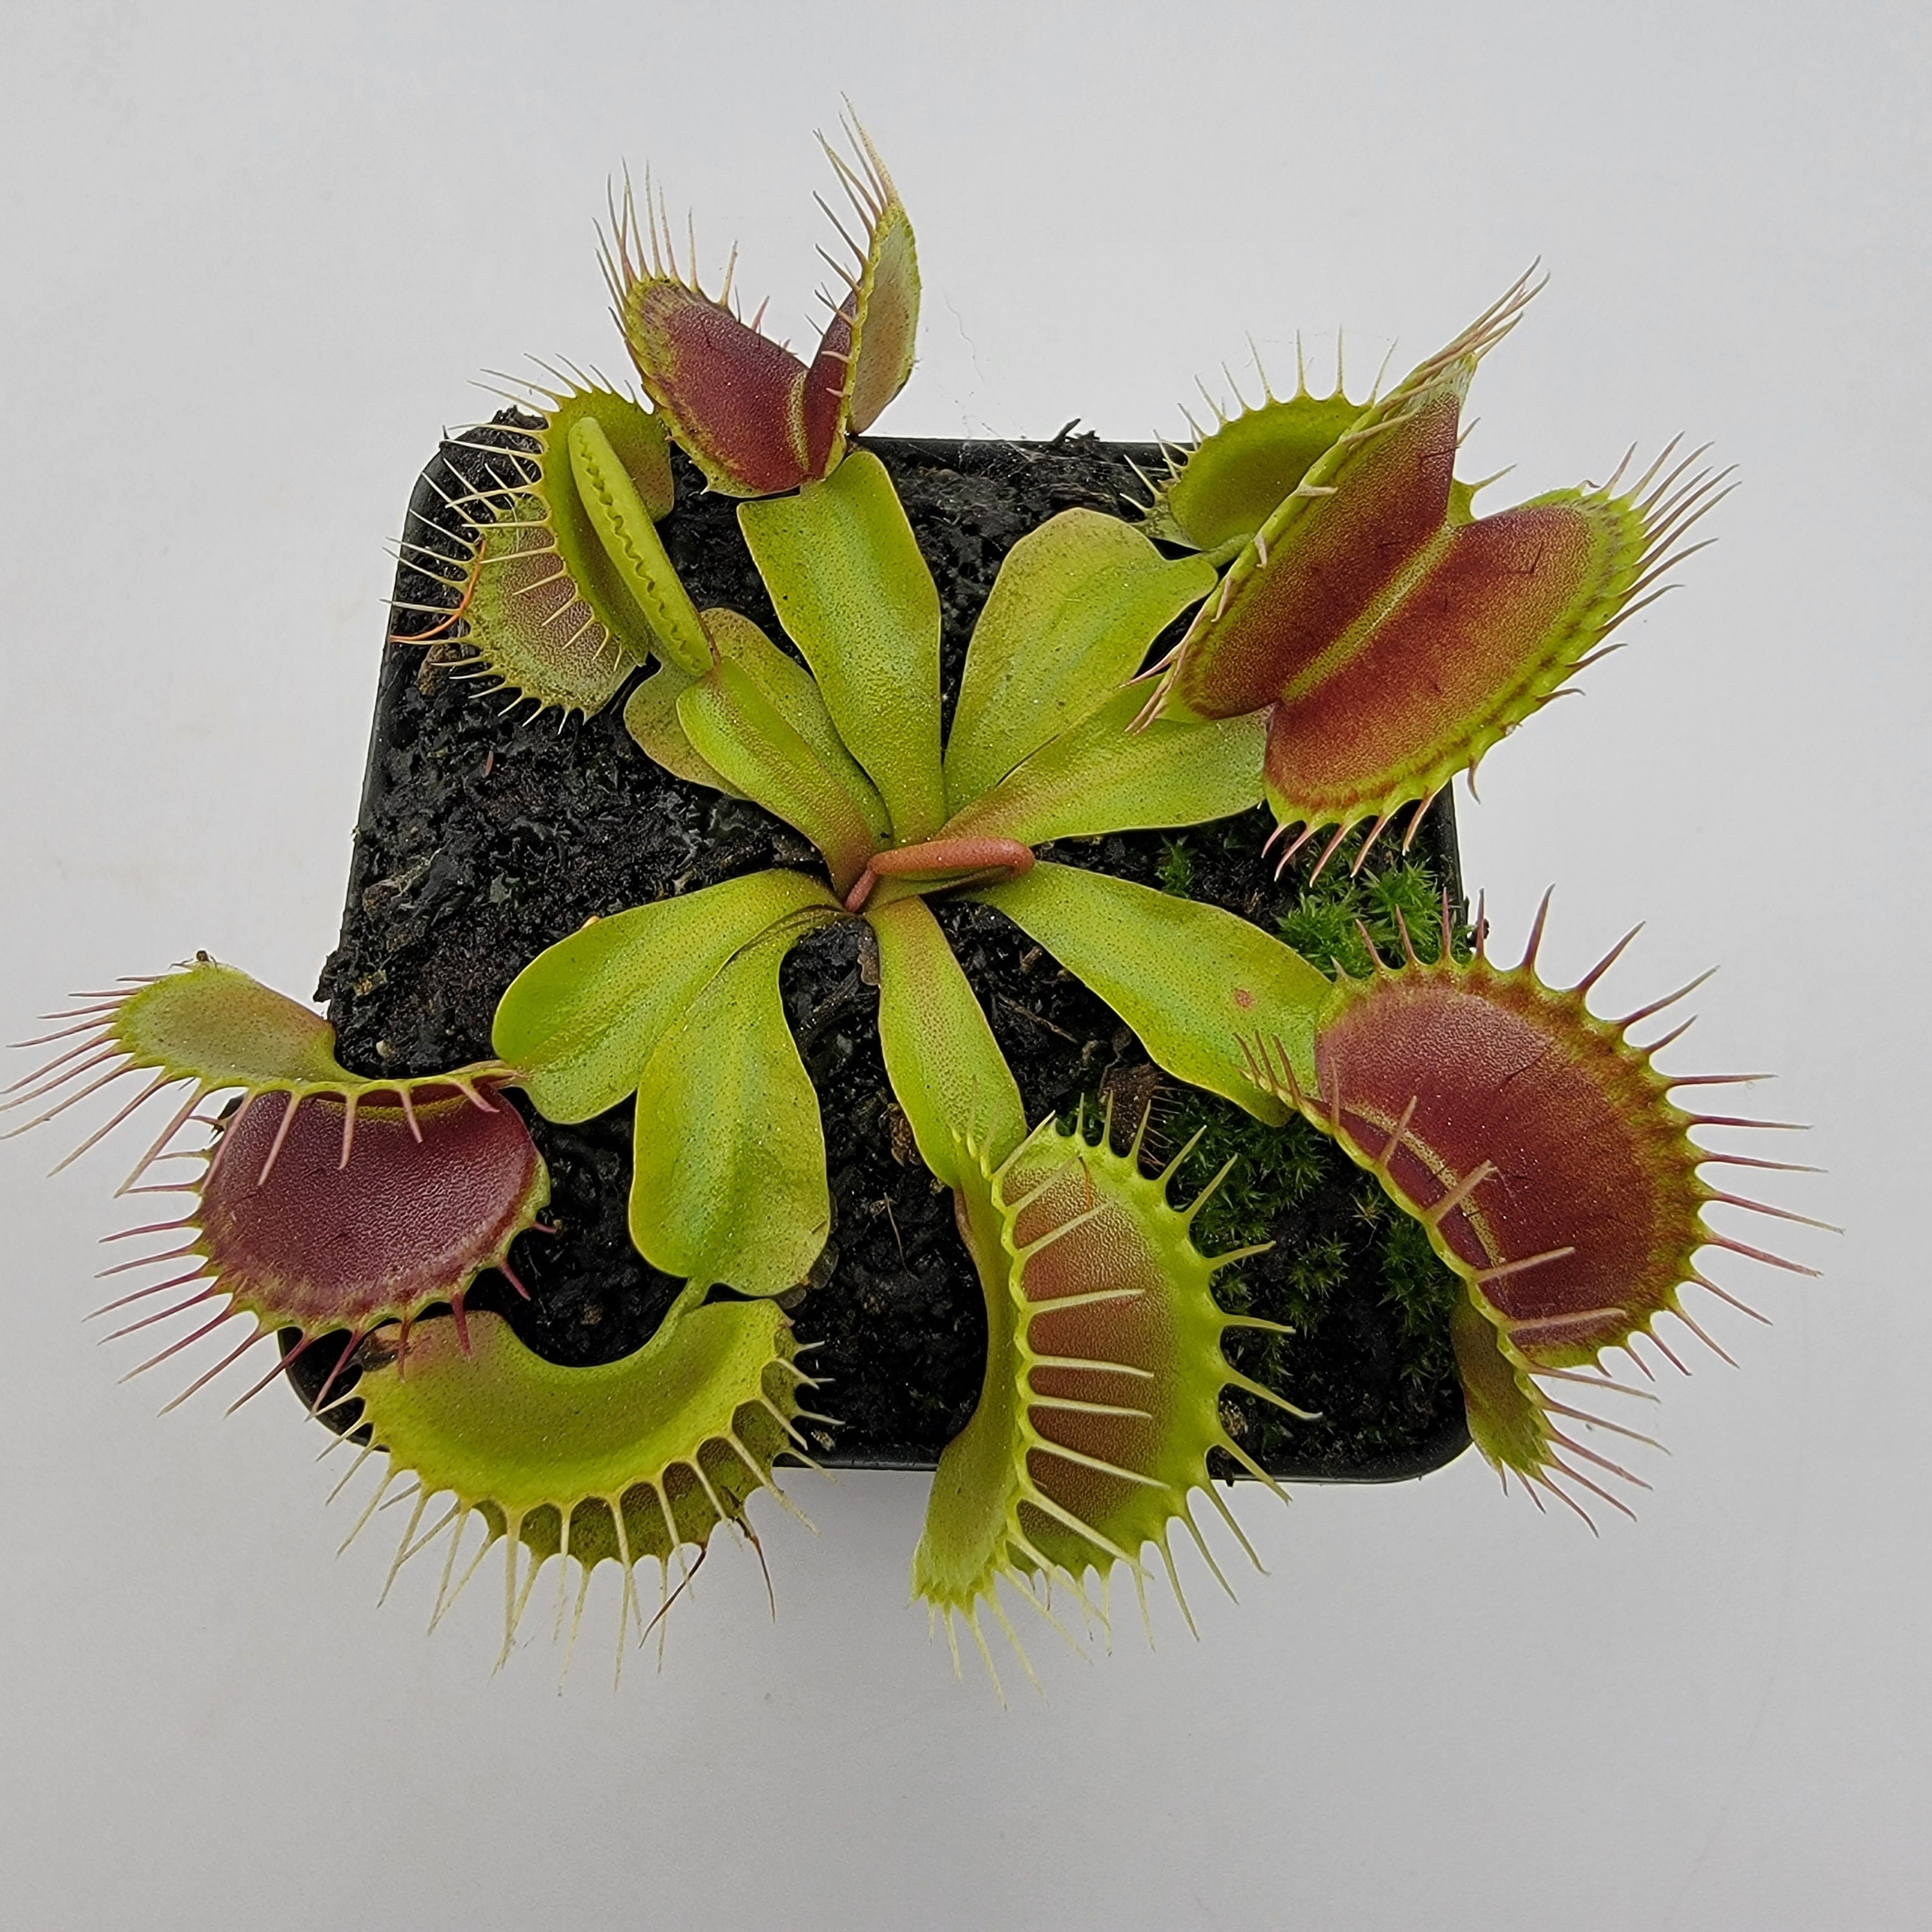 Venus flytrap (Dionaea muscipula)  'Low Giant' x 'Jaws smiley' - Rainbow Carnivorous Plants LLC